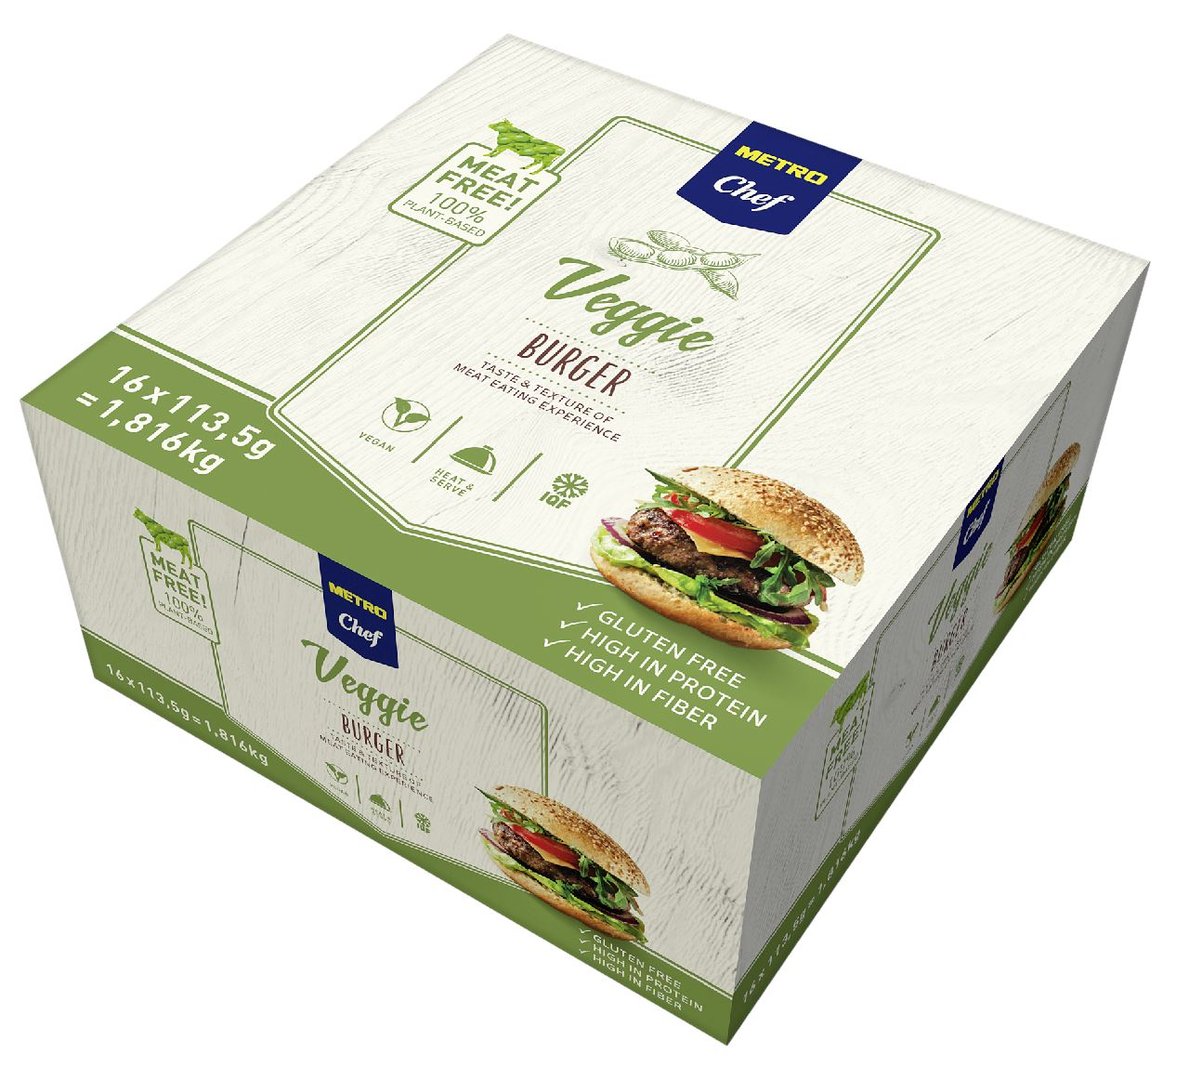 METRO Chef - Vegane Burger tiefgefroren 16 Stück à ca. 113 g - 1,82 kg Packung